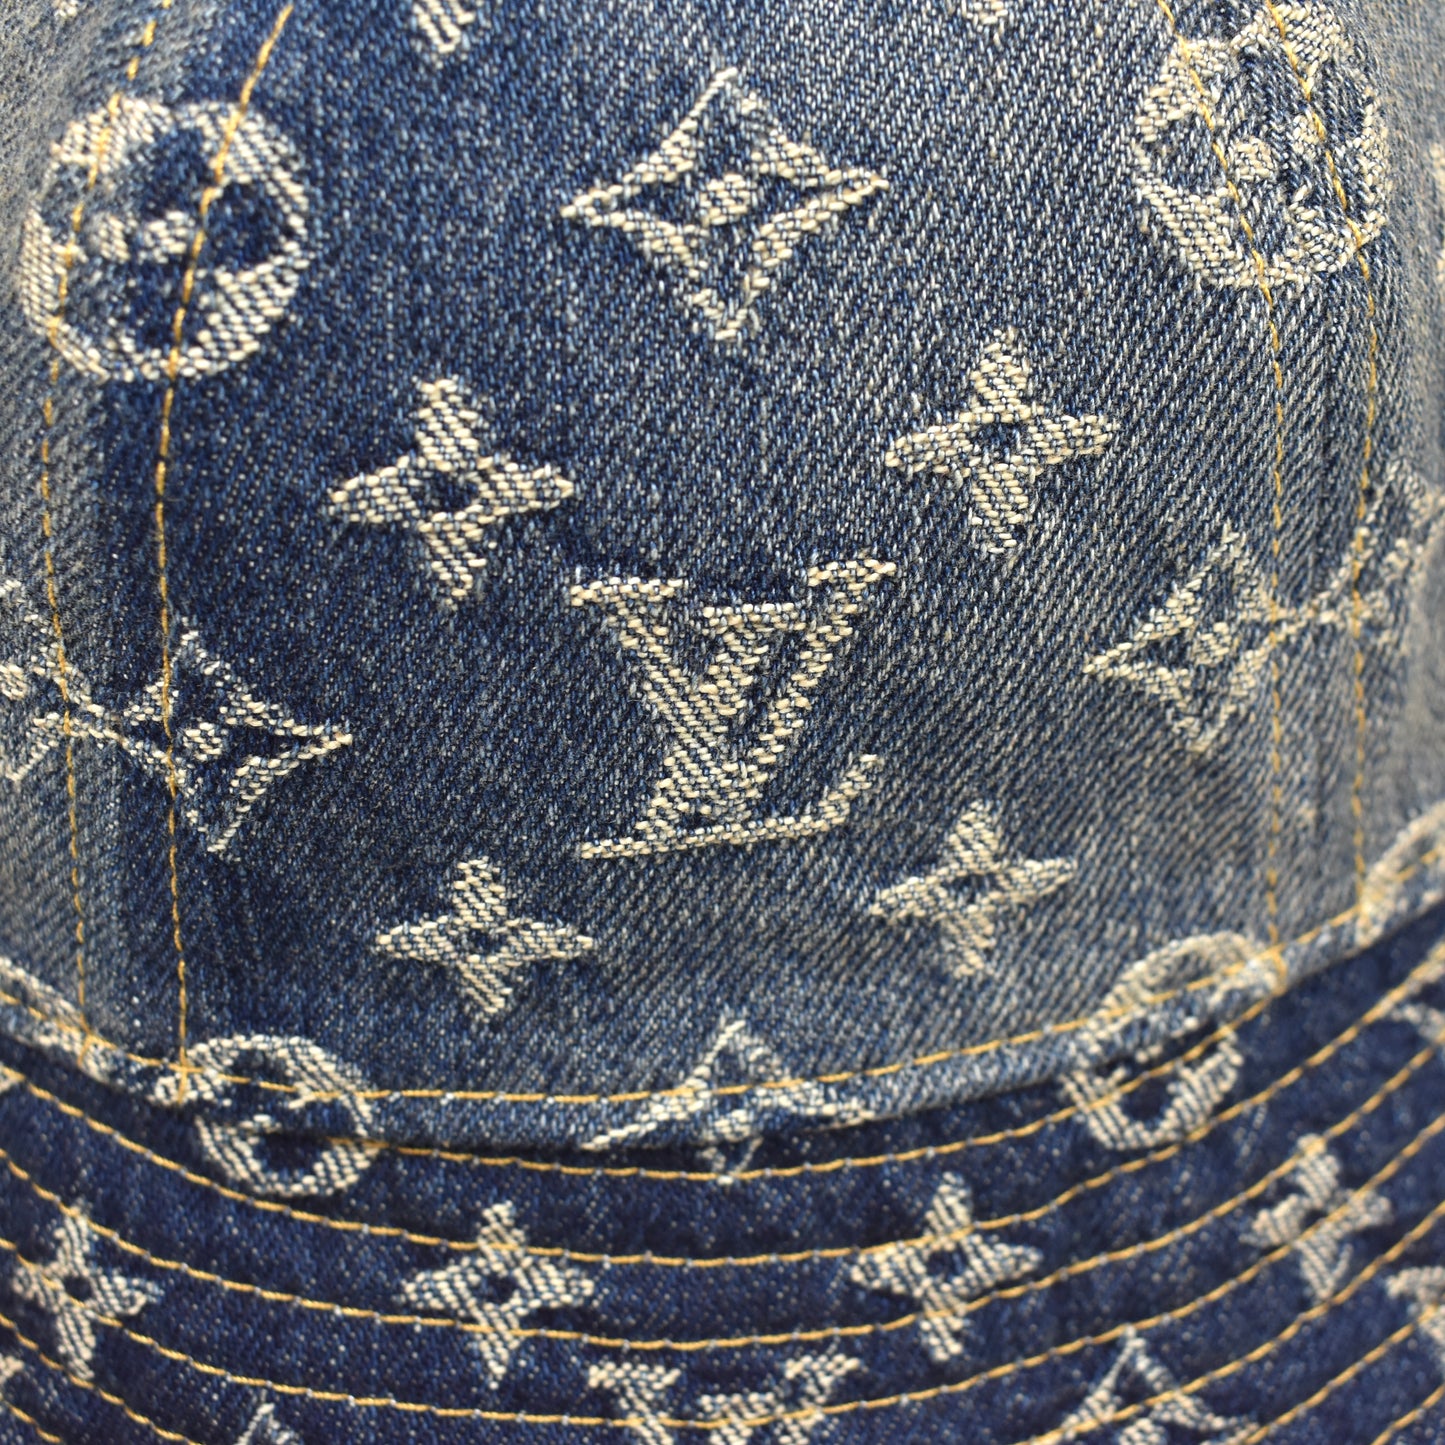 Louis Vuitton - Tapestry Monogram Woven Bucket Hat